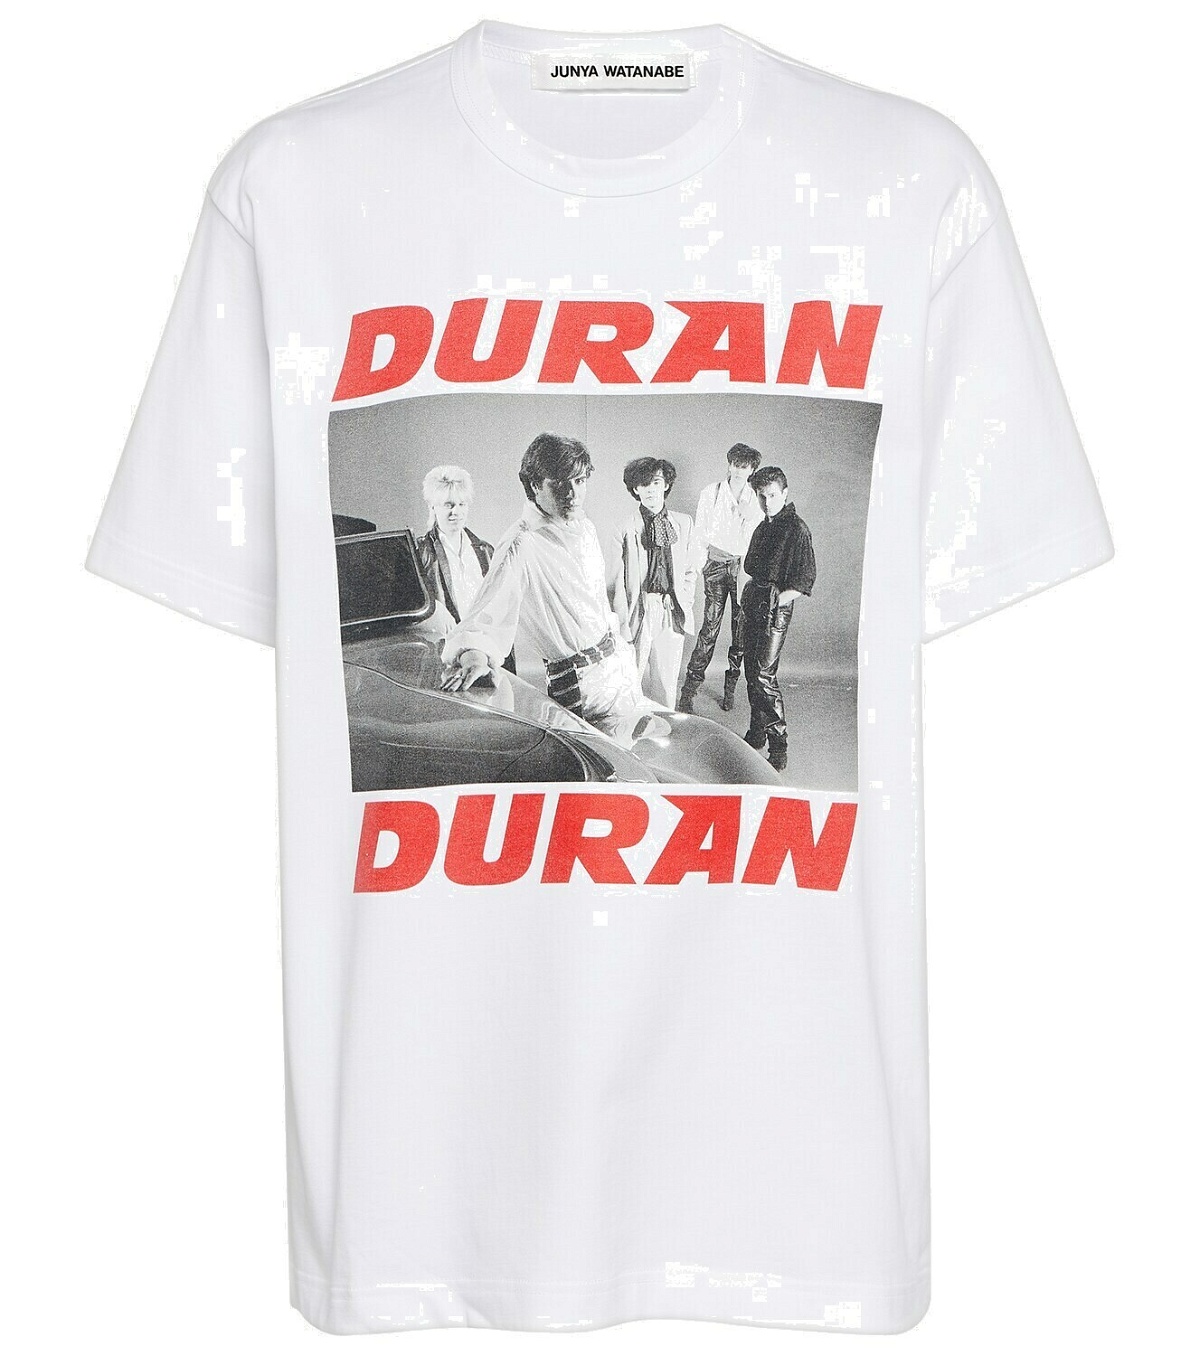 Photo: Junya Watanabe Duran Duran printed cotton T-shirt